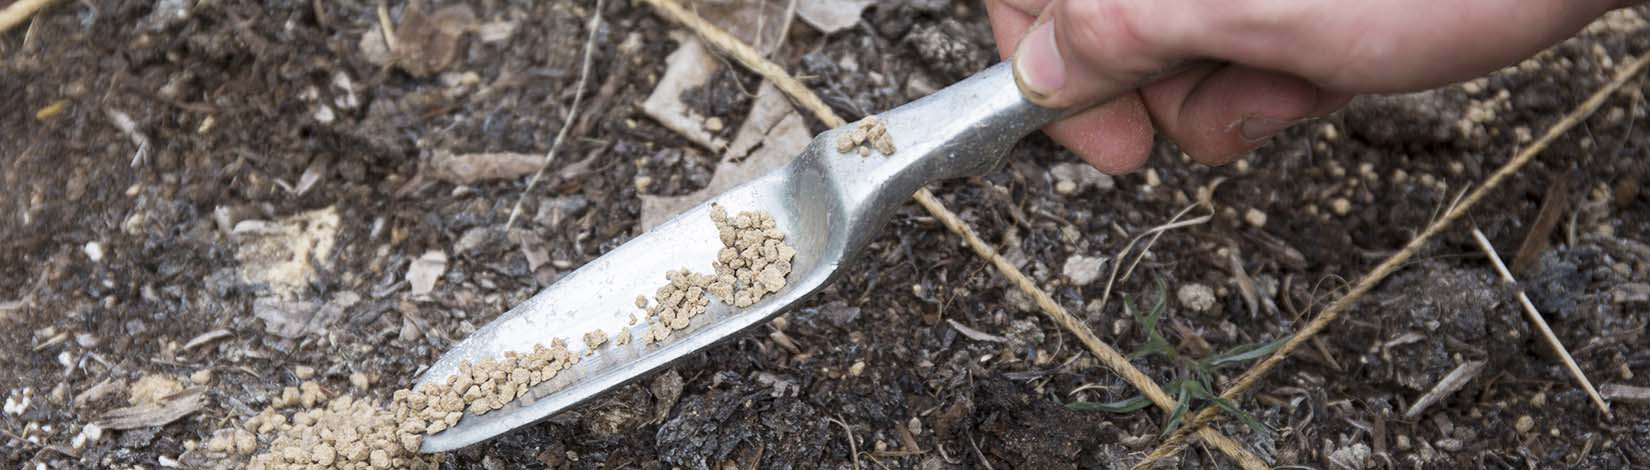 Hand adding fertilizer to a garden using a spade